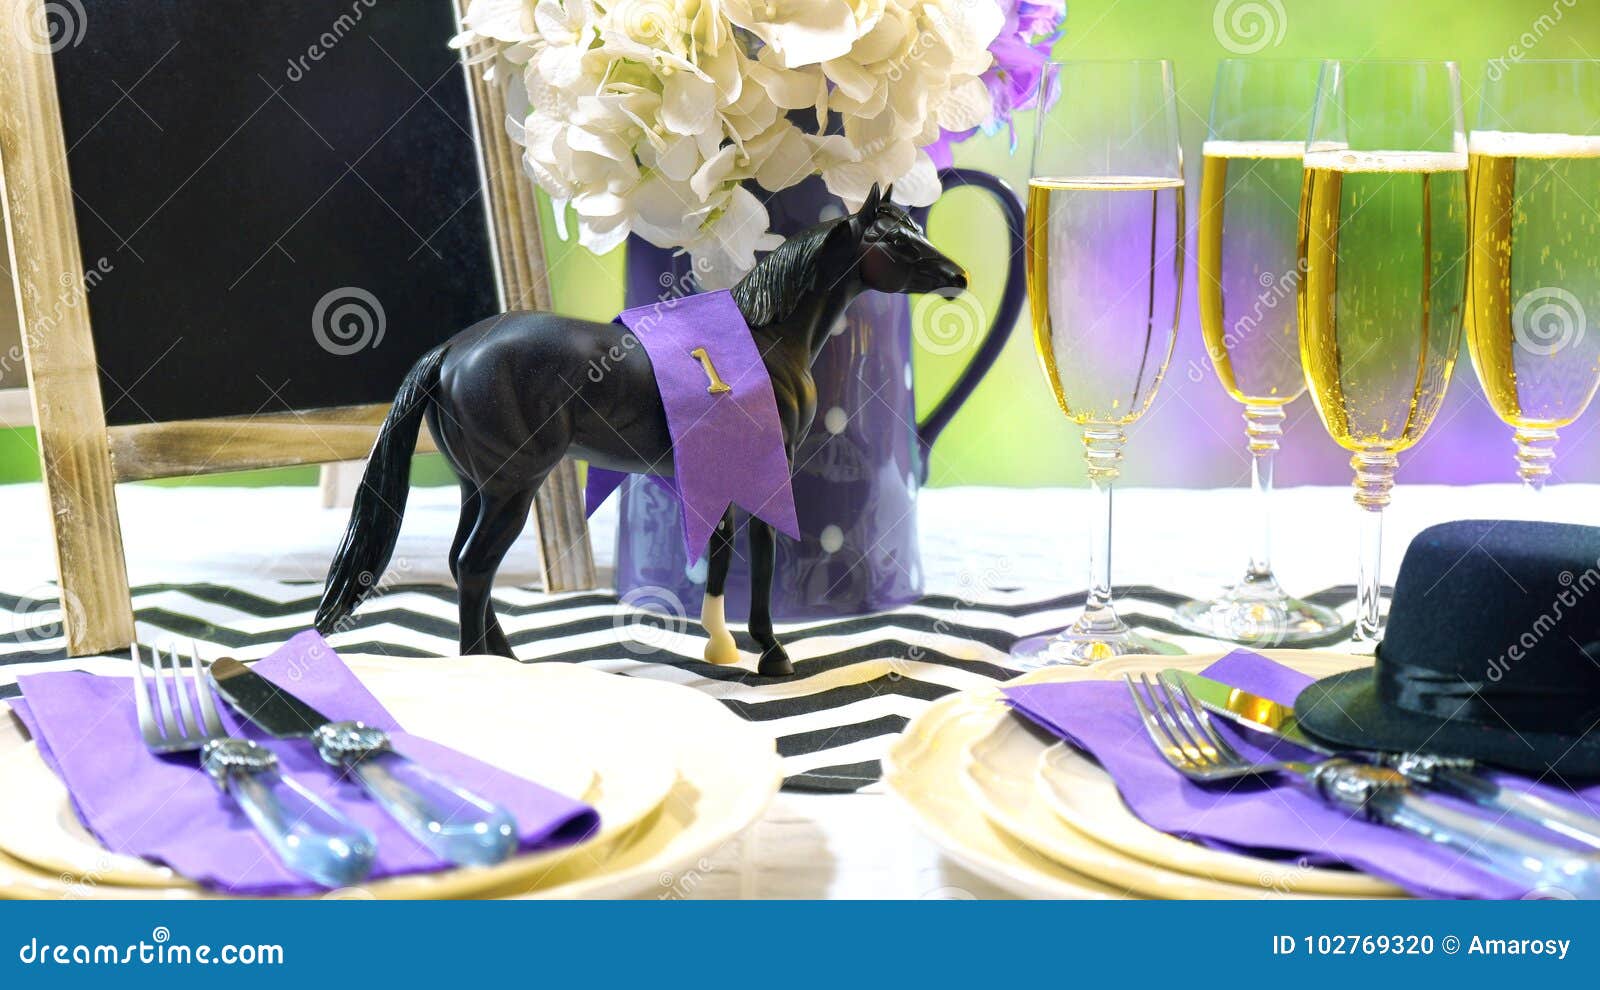 horse racing racing day luncheon table setting